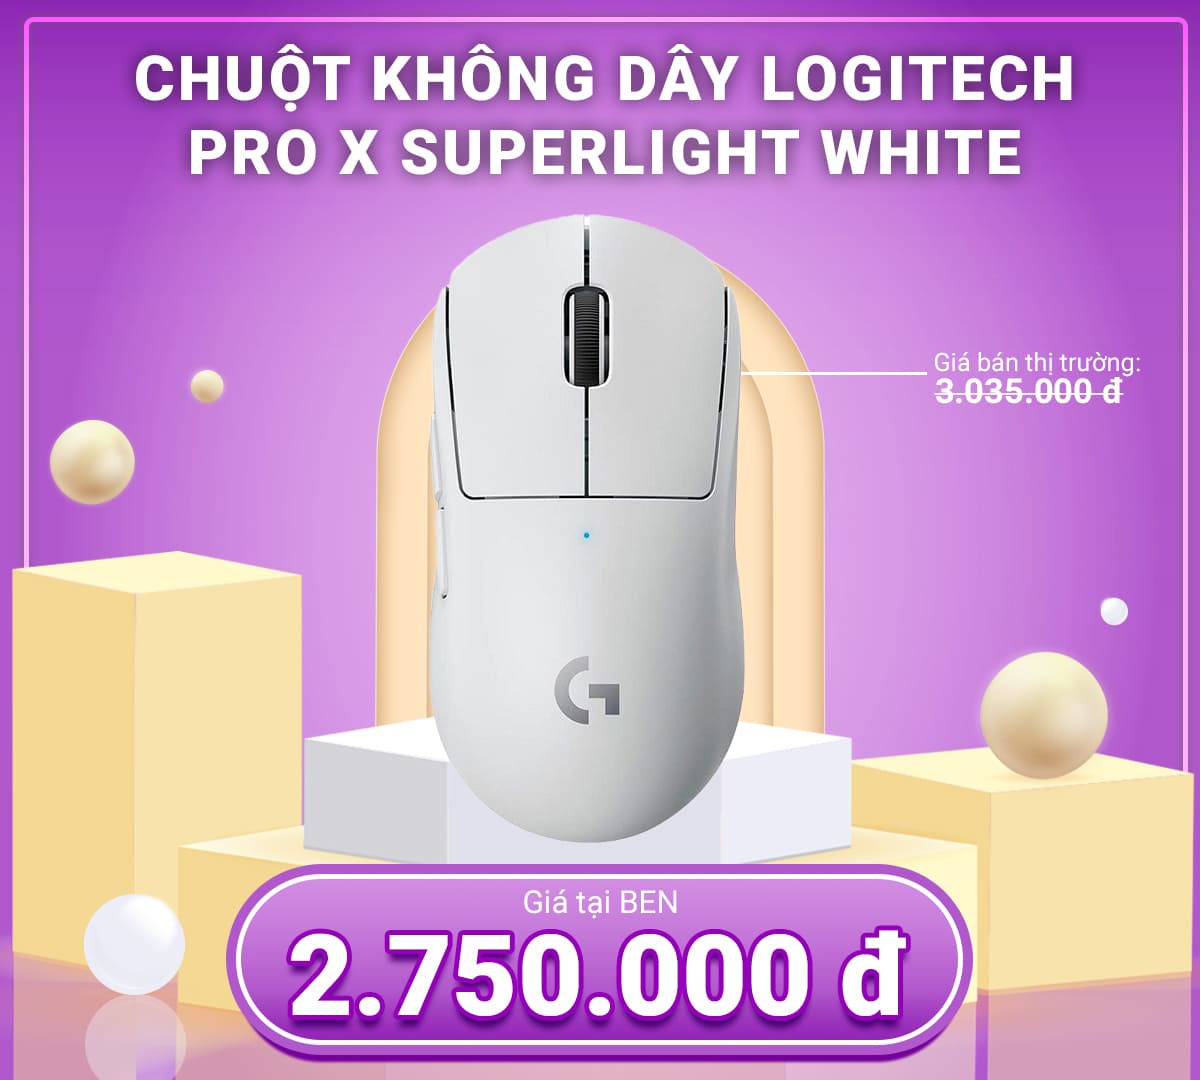 Logitech Pro X Superlight white